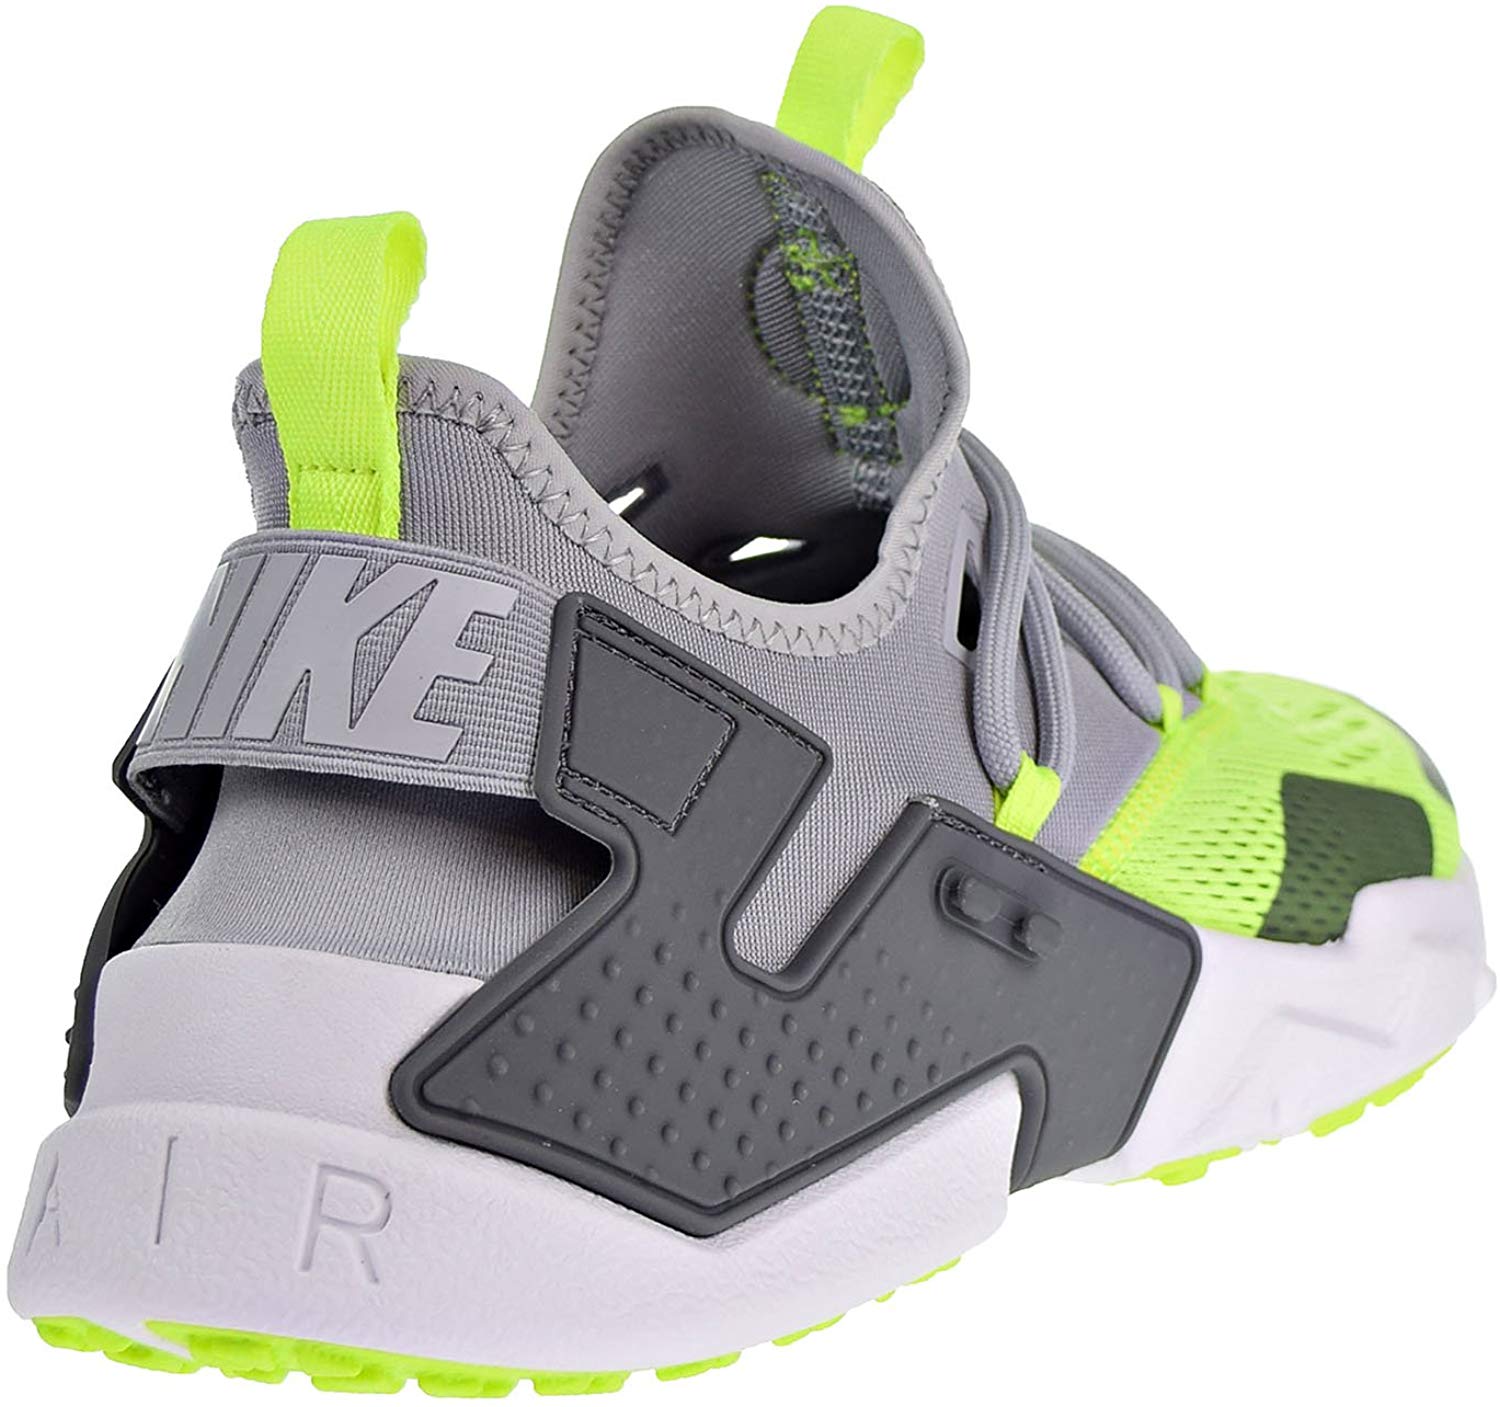 Nike Mens Huarache Run PRM Low Top Lace Up Running, Grey/Neo/Black, Size 10.5 | eBay